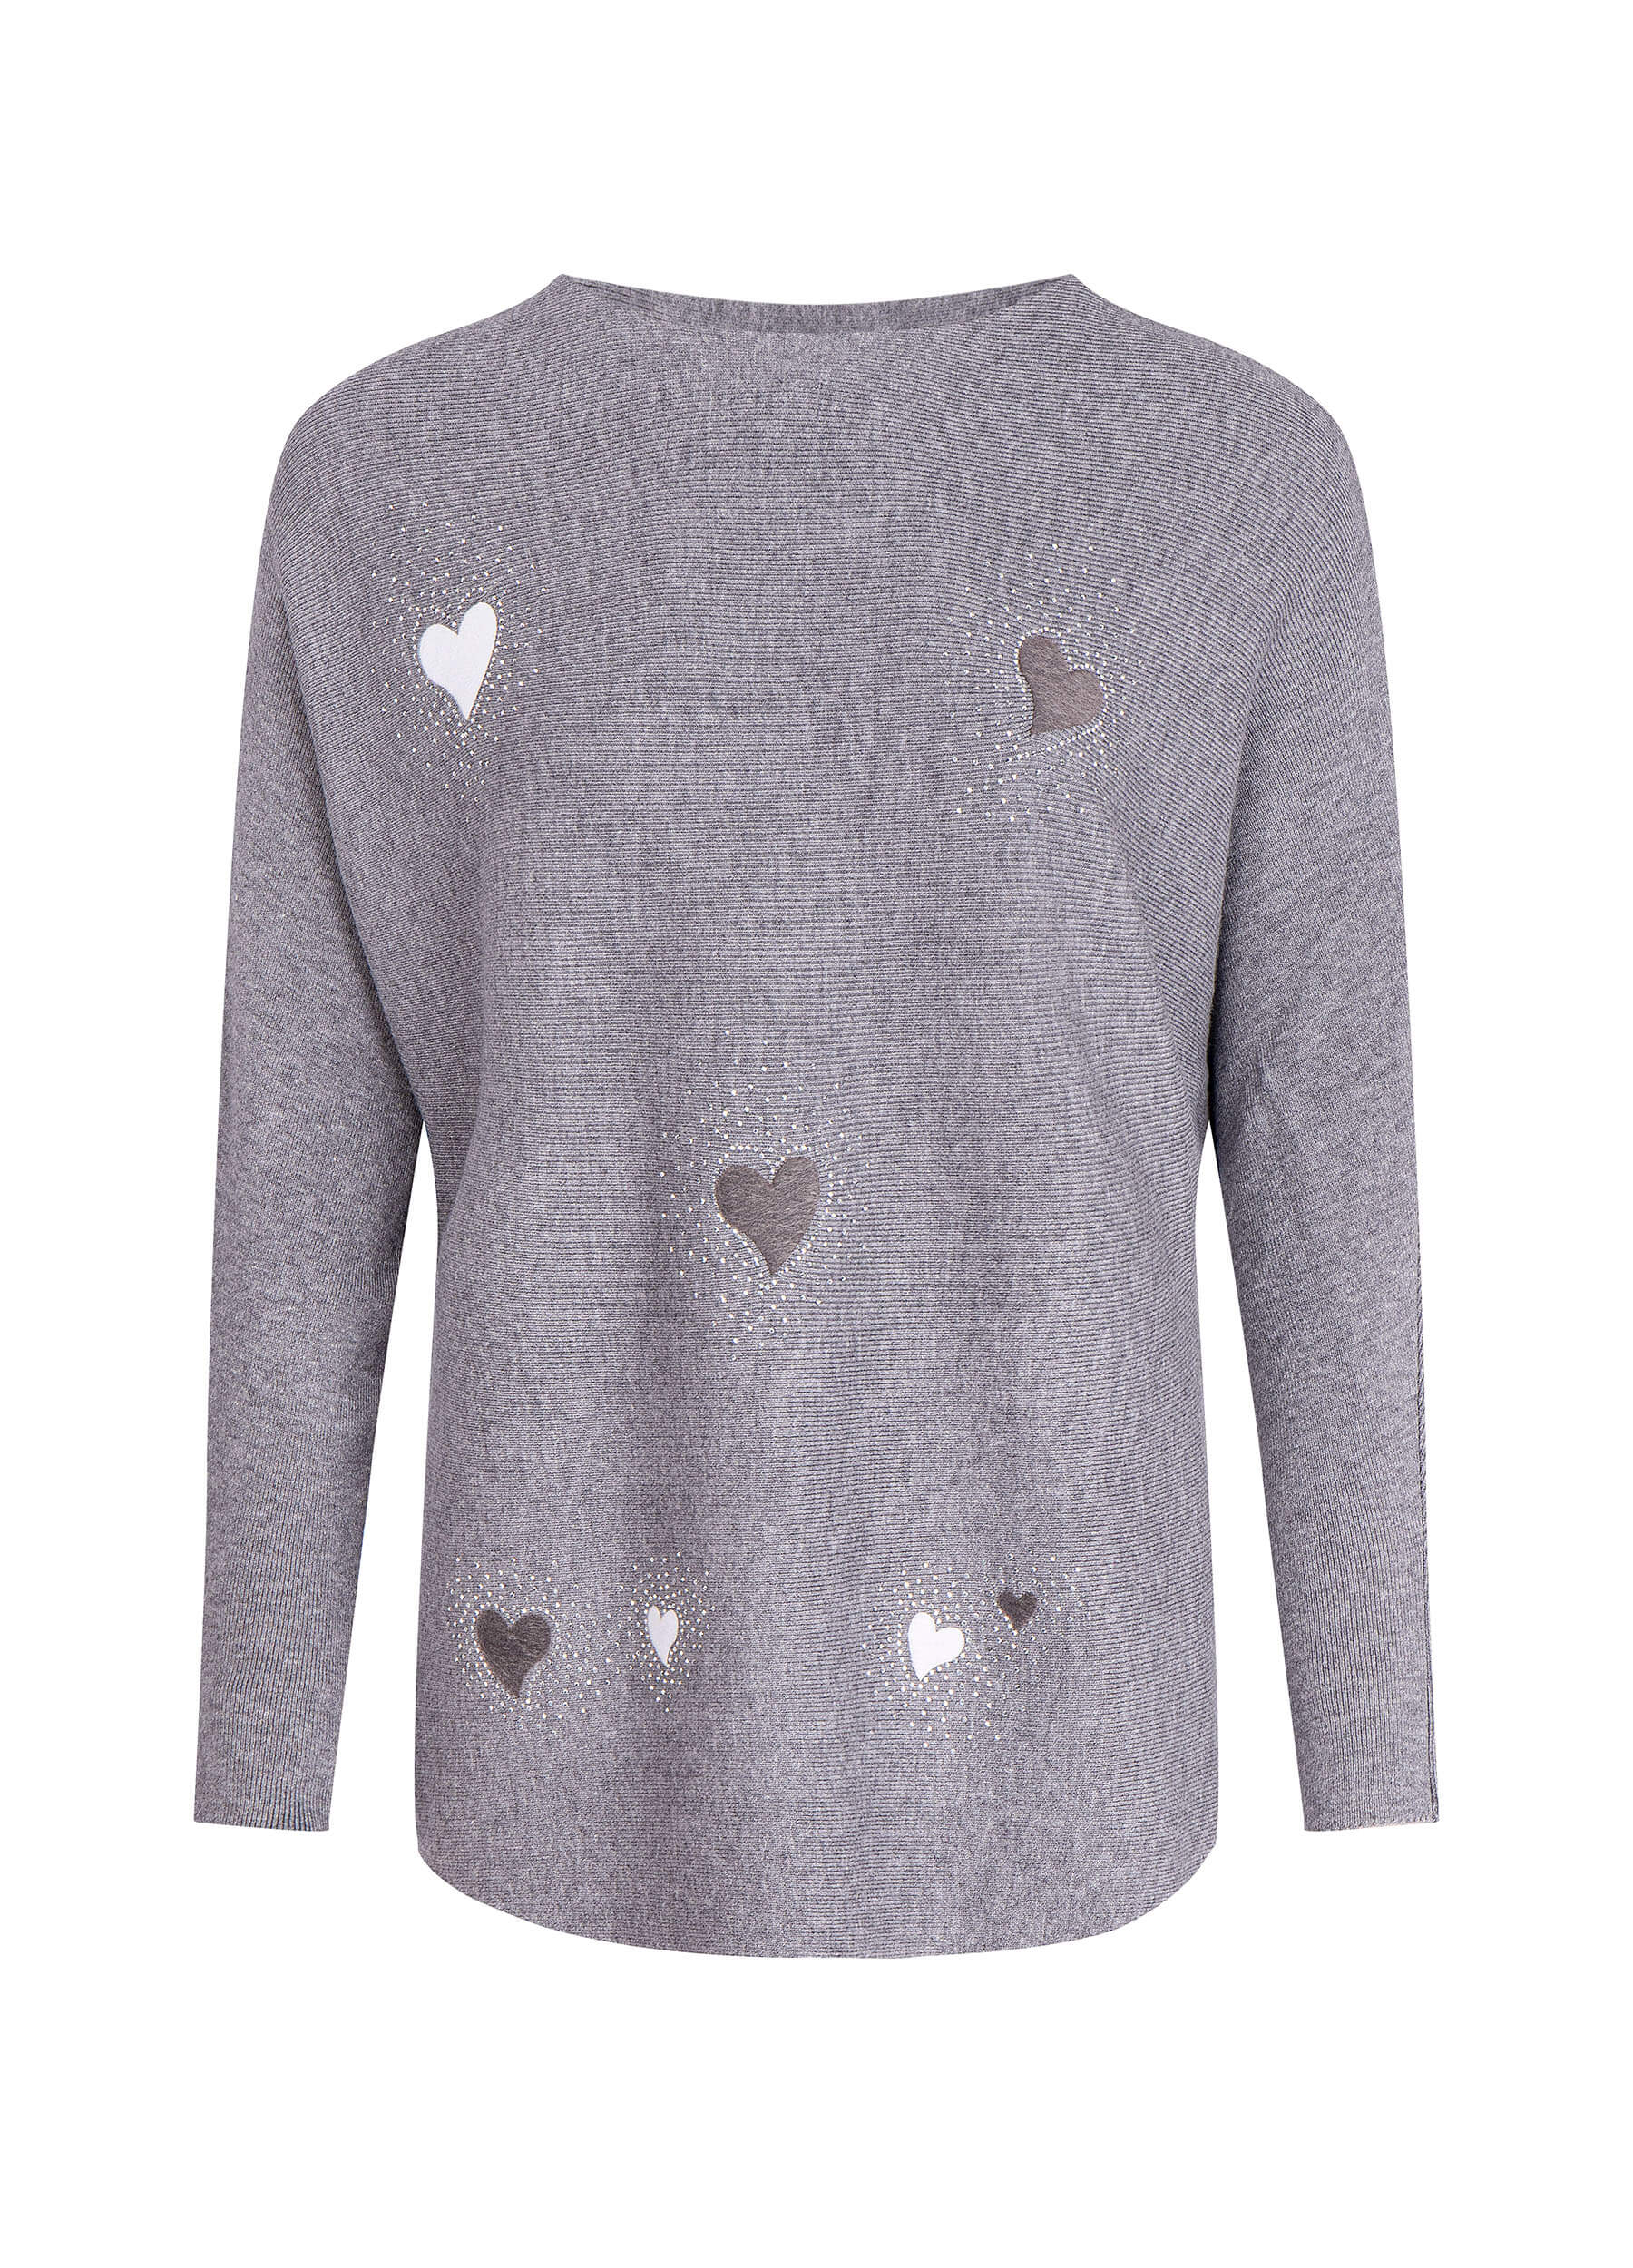 FINEPEEK Women's Fall Heart Applique Round Neck Long Sleeve Pullover Sweater-Grey